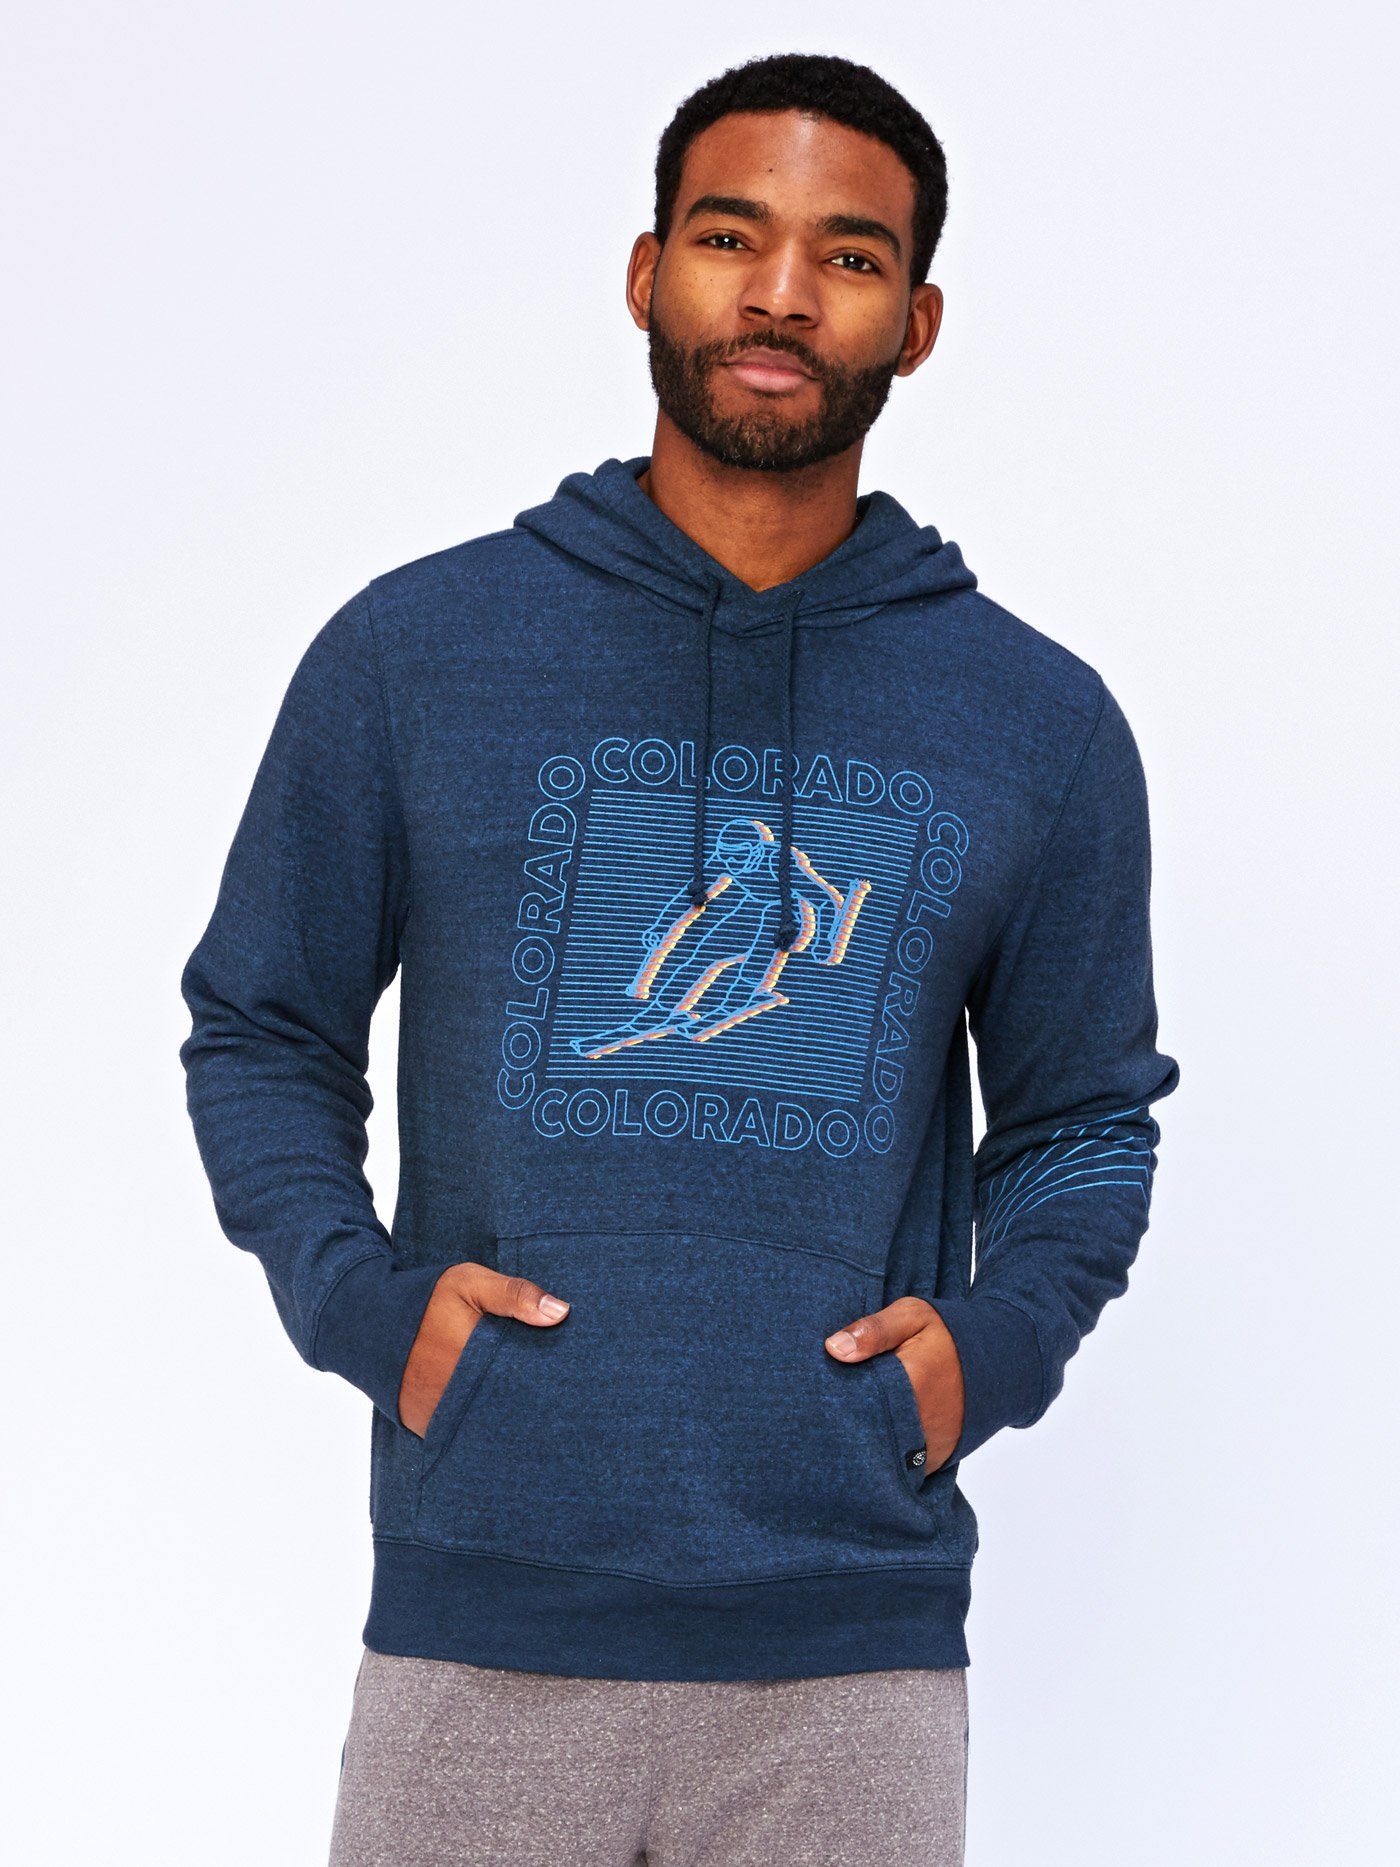 Colorado Ski Graphic Hoodie Mens Outerwear Sweatshirt Threads 4 Thought